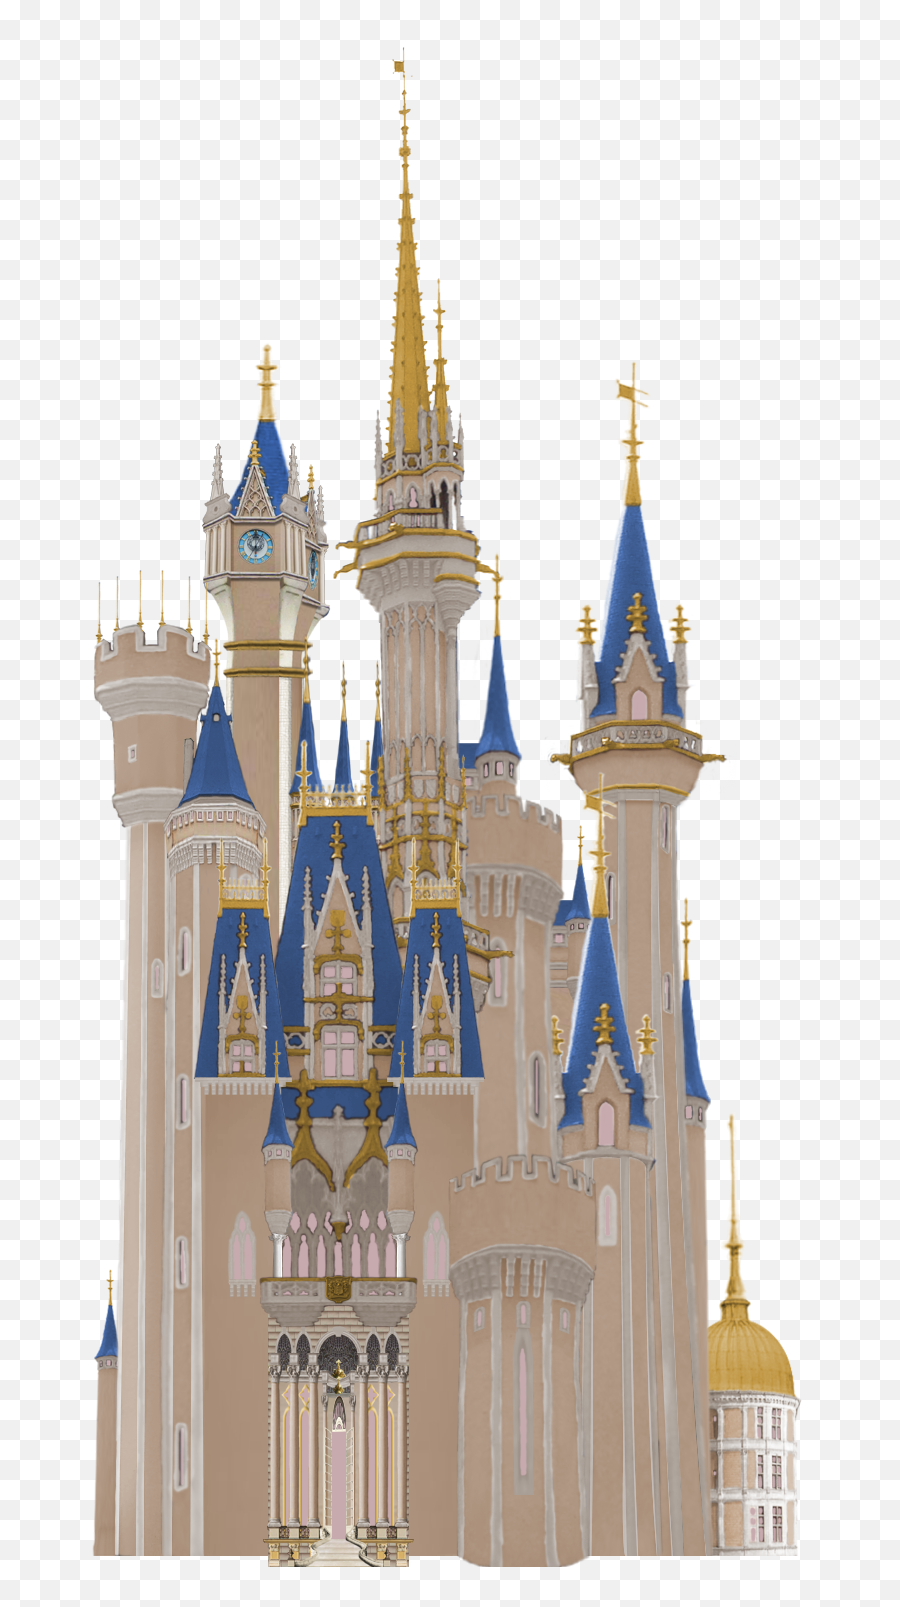 Kingdom Hearts Cinderella Castle - Kingdom Hearts Disney Castle Png,Disney Castle Transparent Background